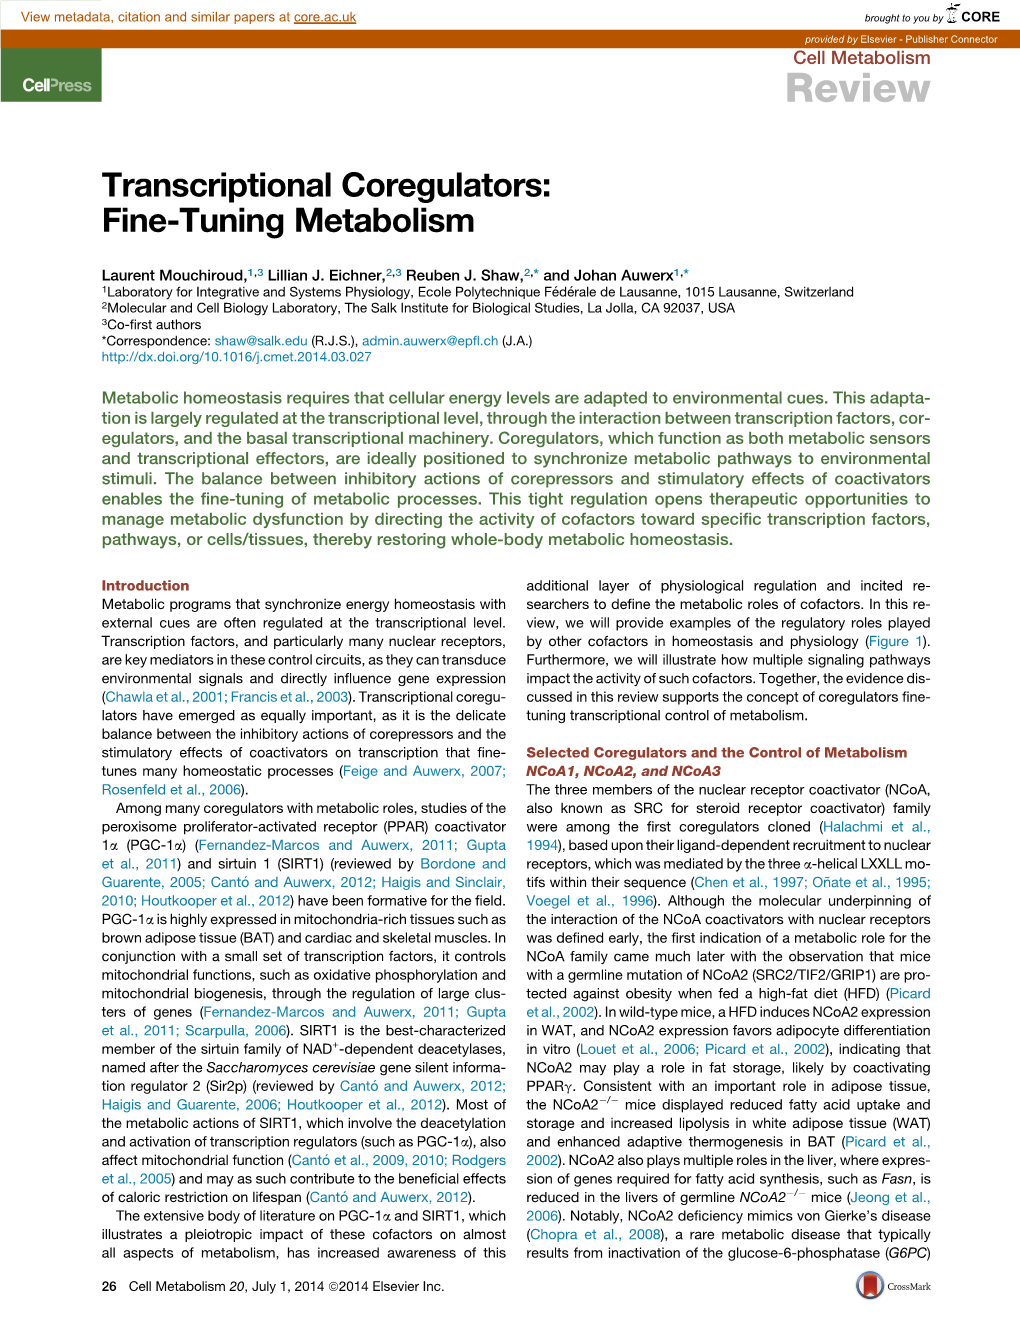 Transcriptional Coregulators: Fine-Tuning Metabolism